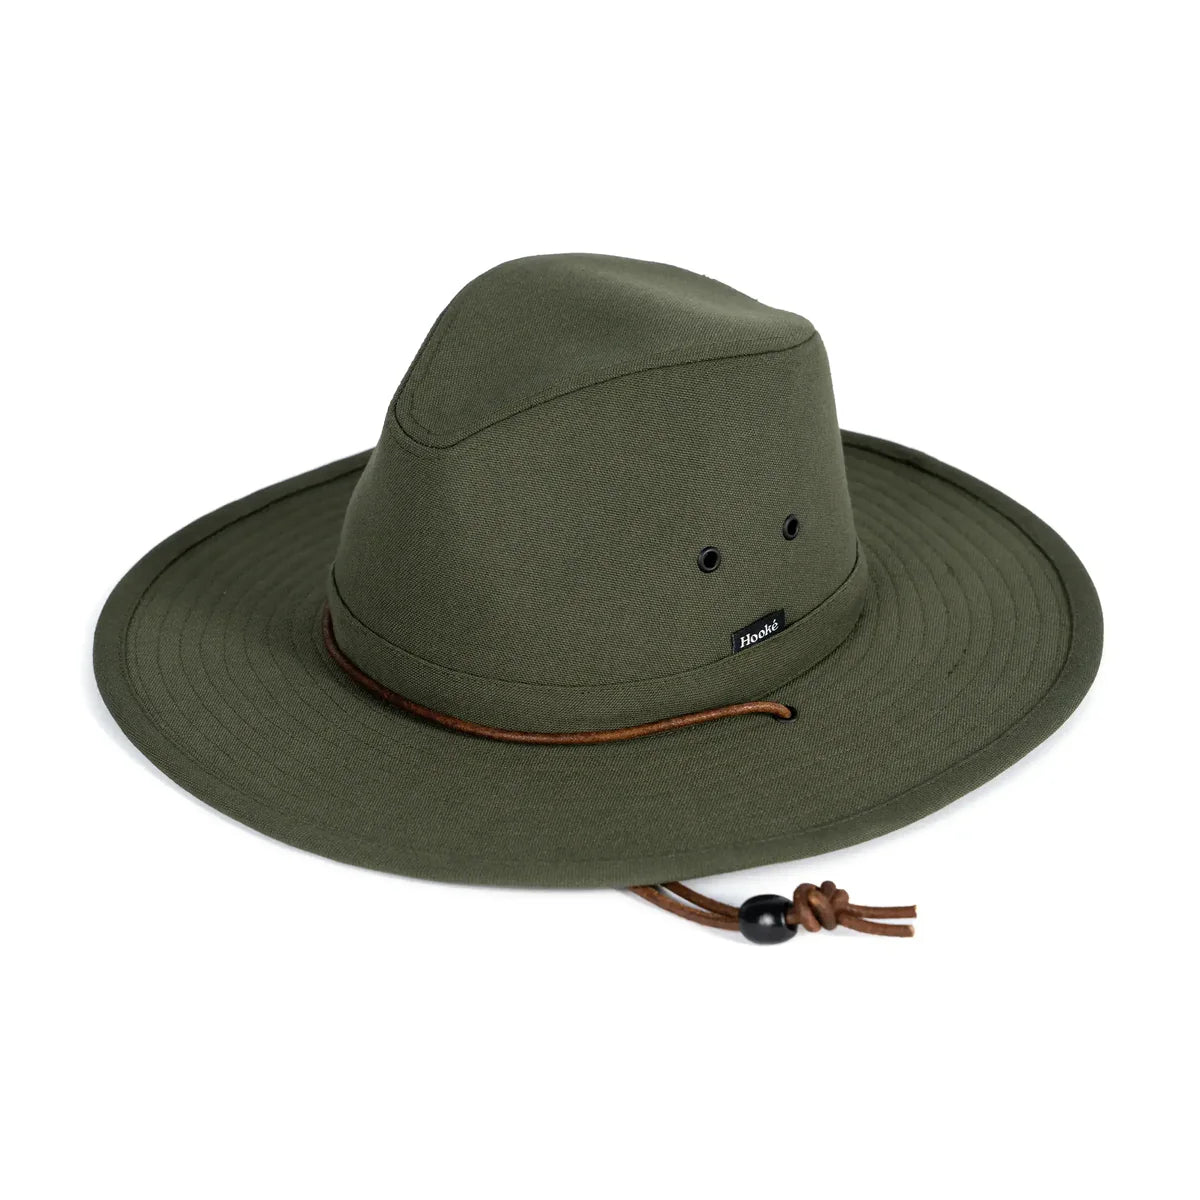 Hooke Expedition hat